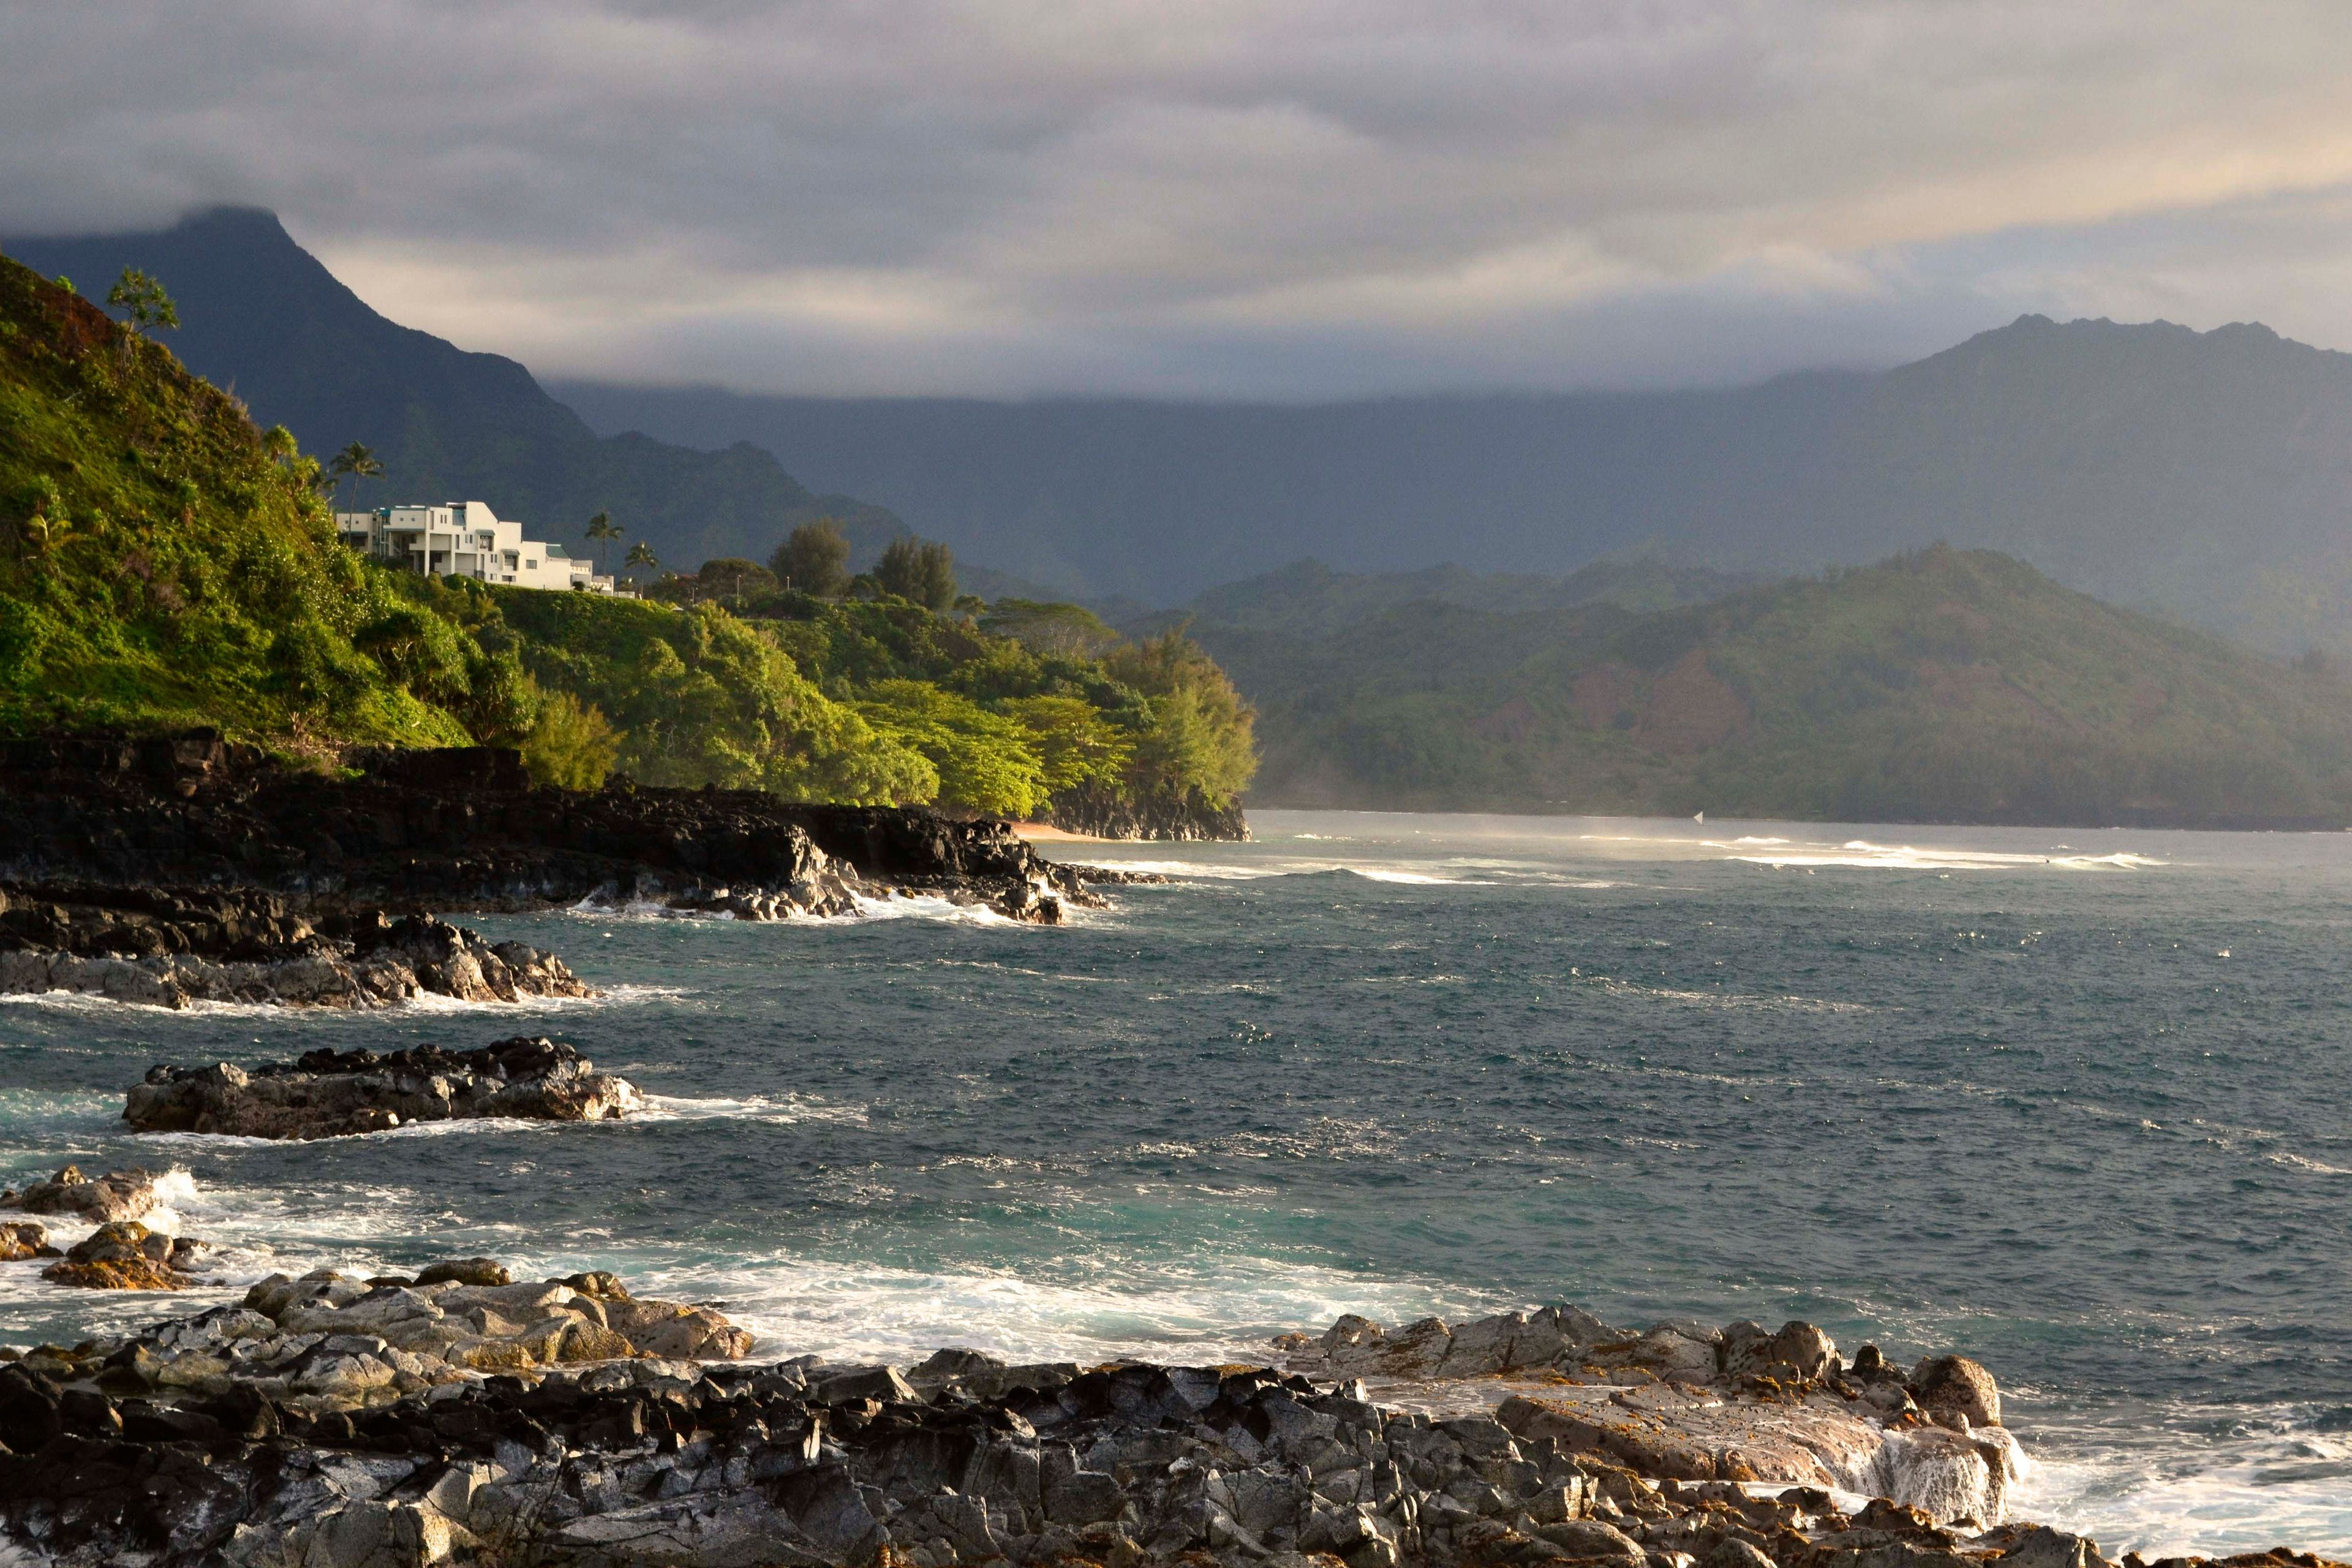 The shoreline and mountains in Kauai, Hawaii.